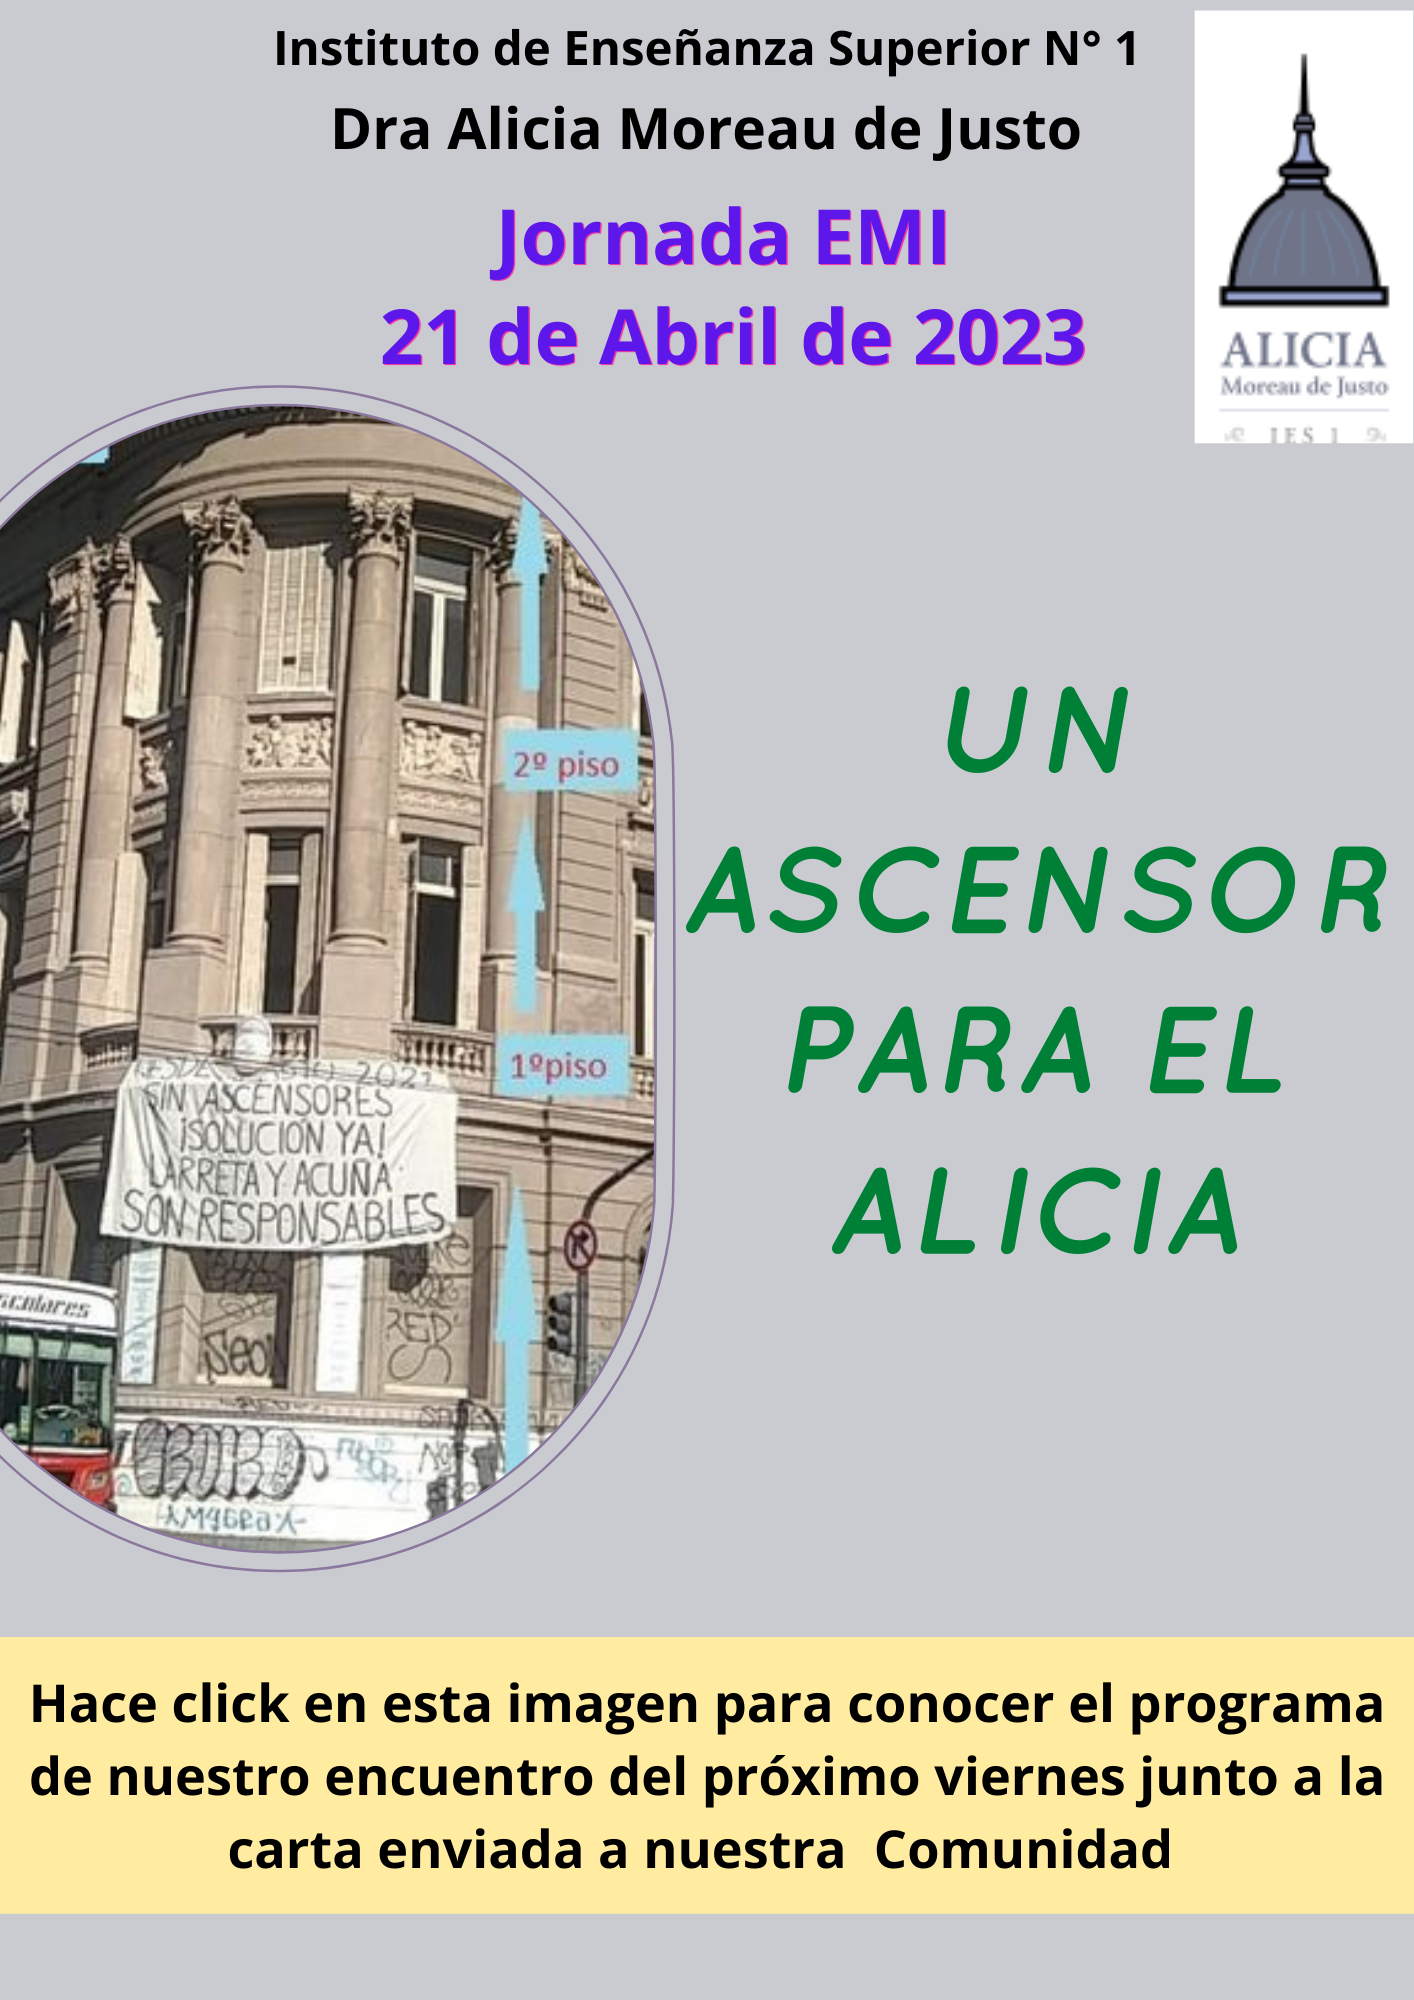 Un ascensor para el Alicia - (c) 2023